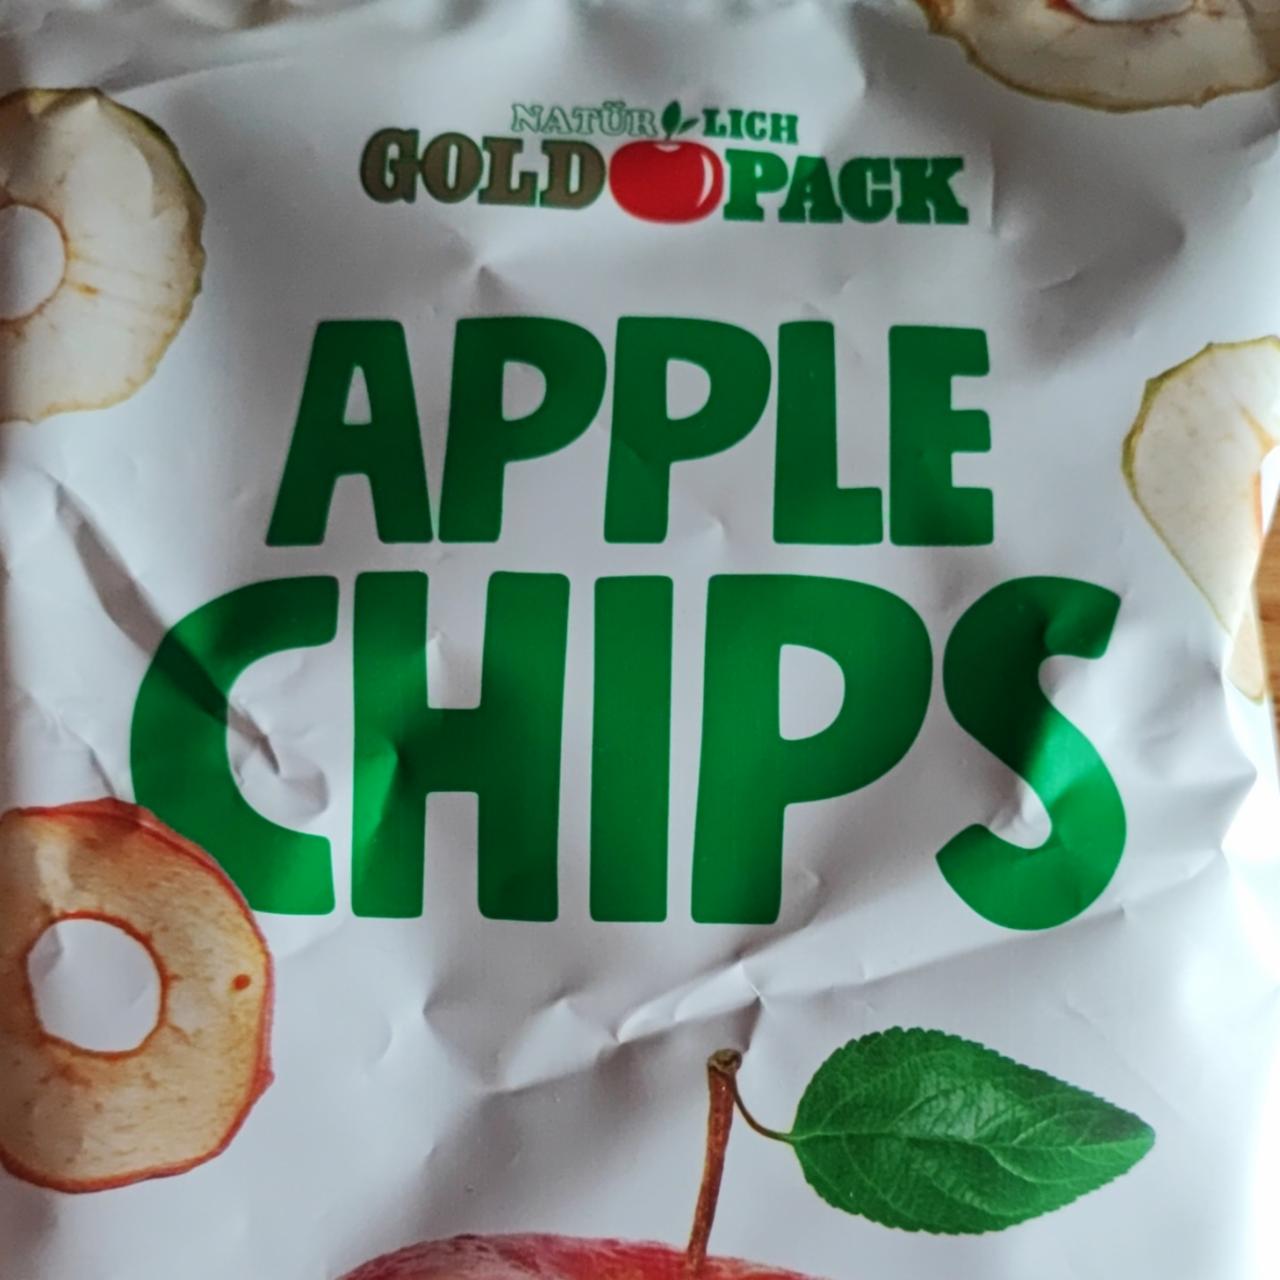 Fotografie - Apple Chips Gold Pack